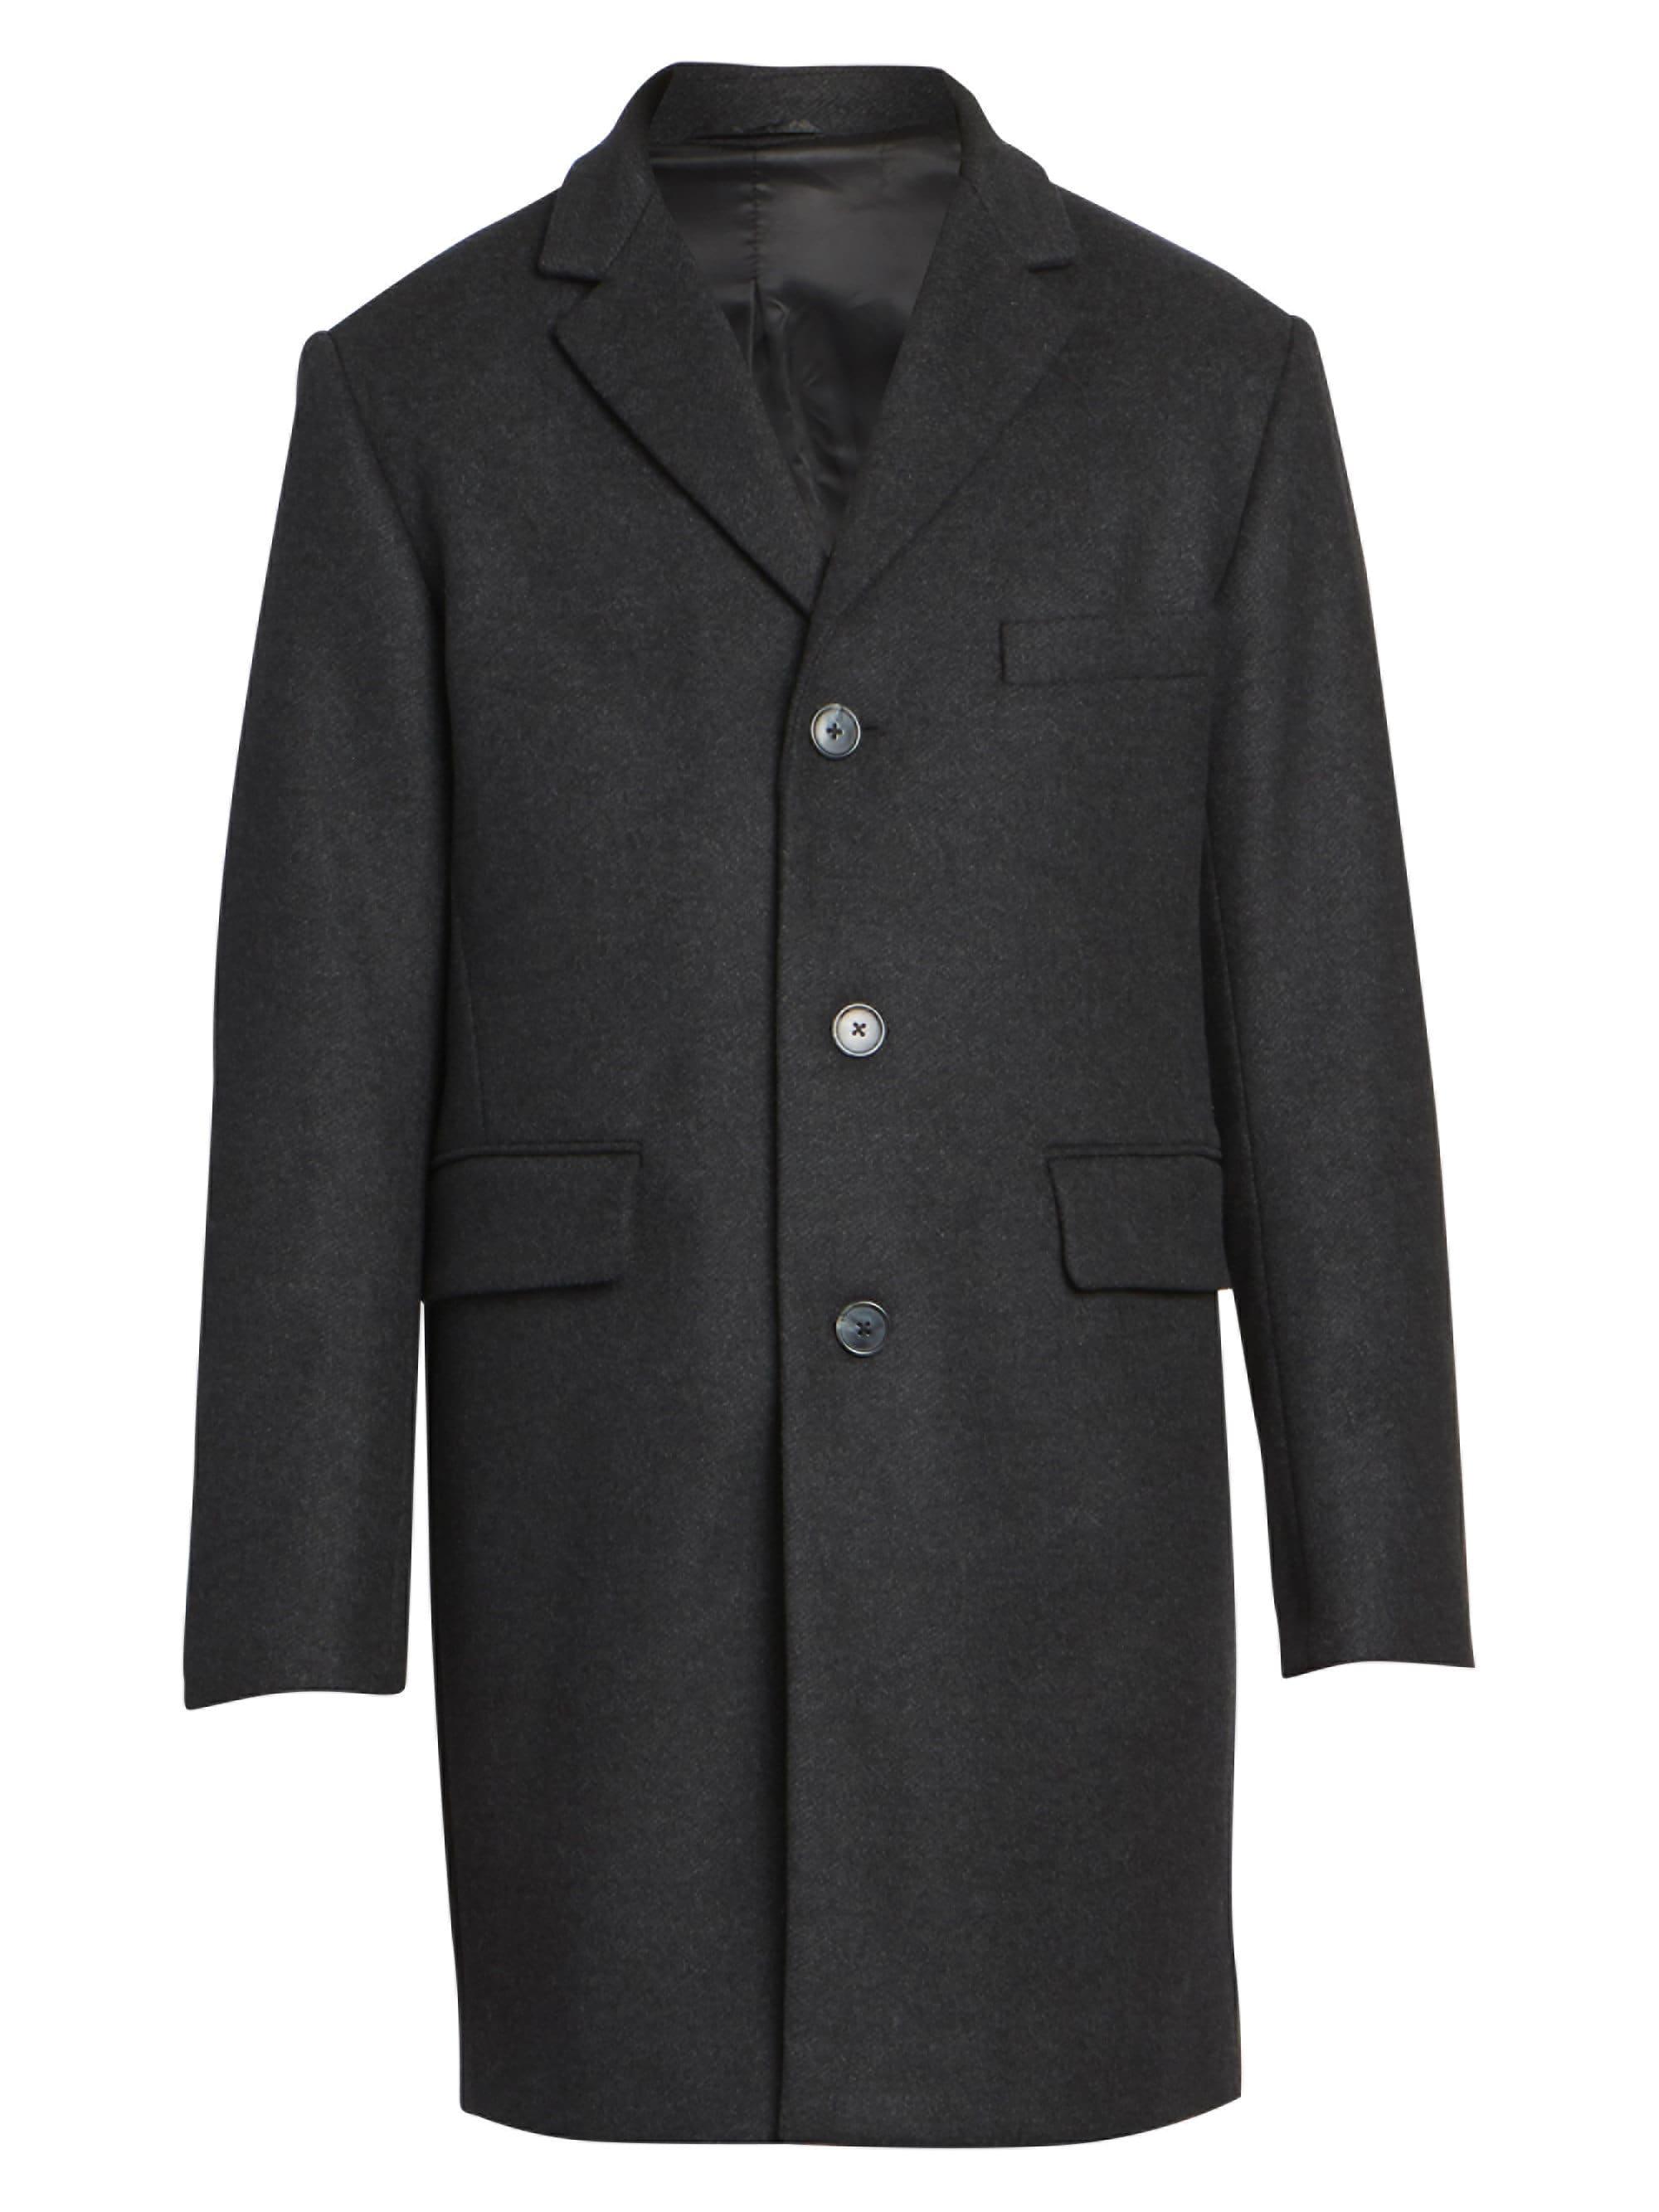 Officine Generale Alfie Wool & Cashmere Coat in Grey (Gray) for Men - Lyst